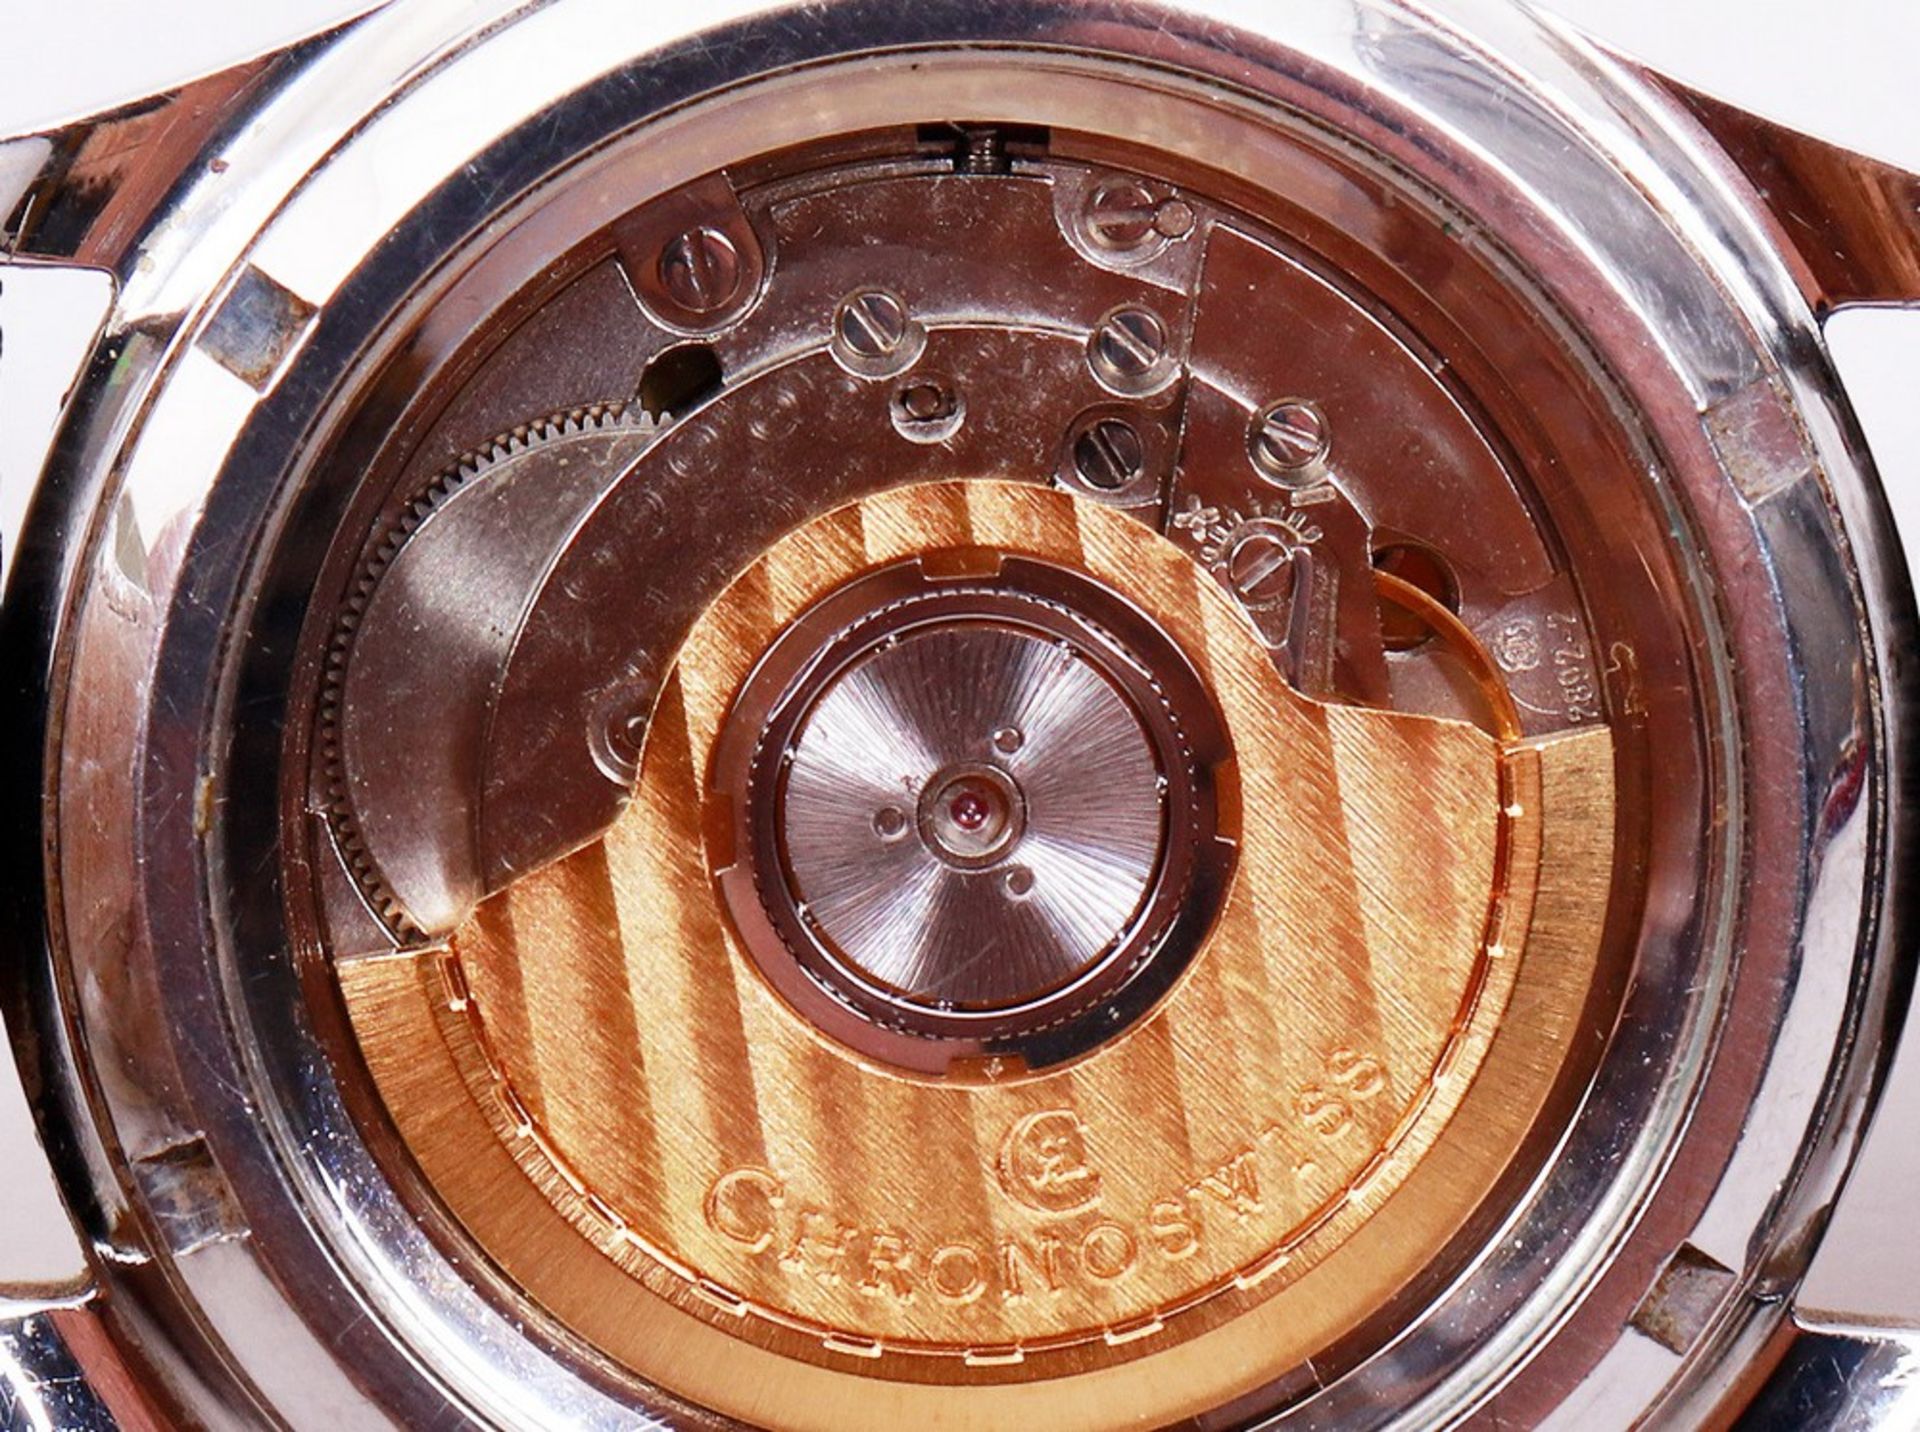 Men's wristwatch, Chronoswiss, model "Pacific 100m", 1990s - Image 8 of 13